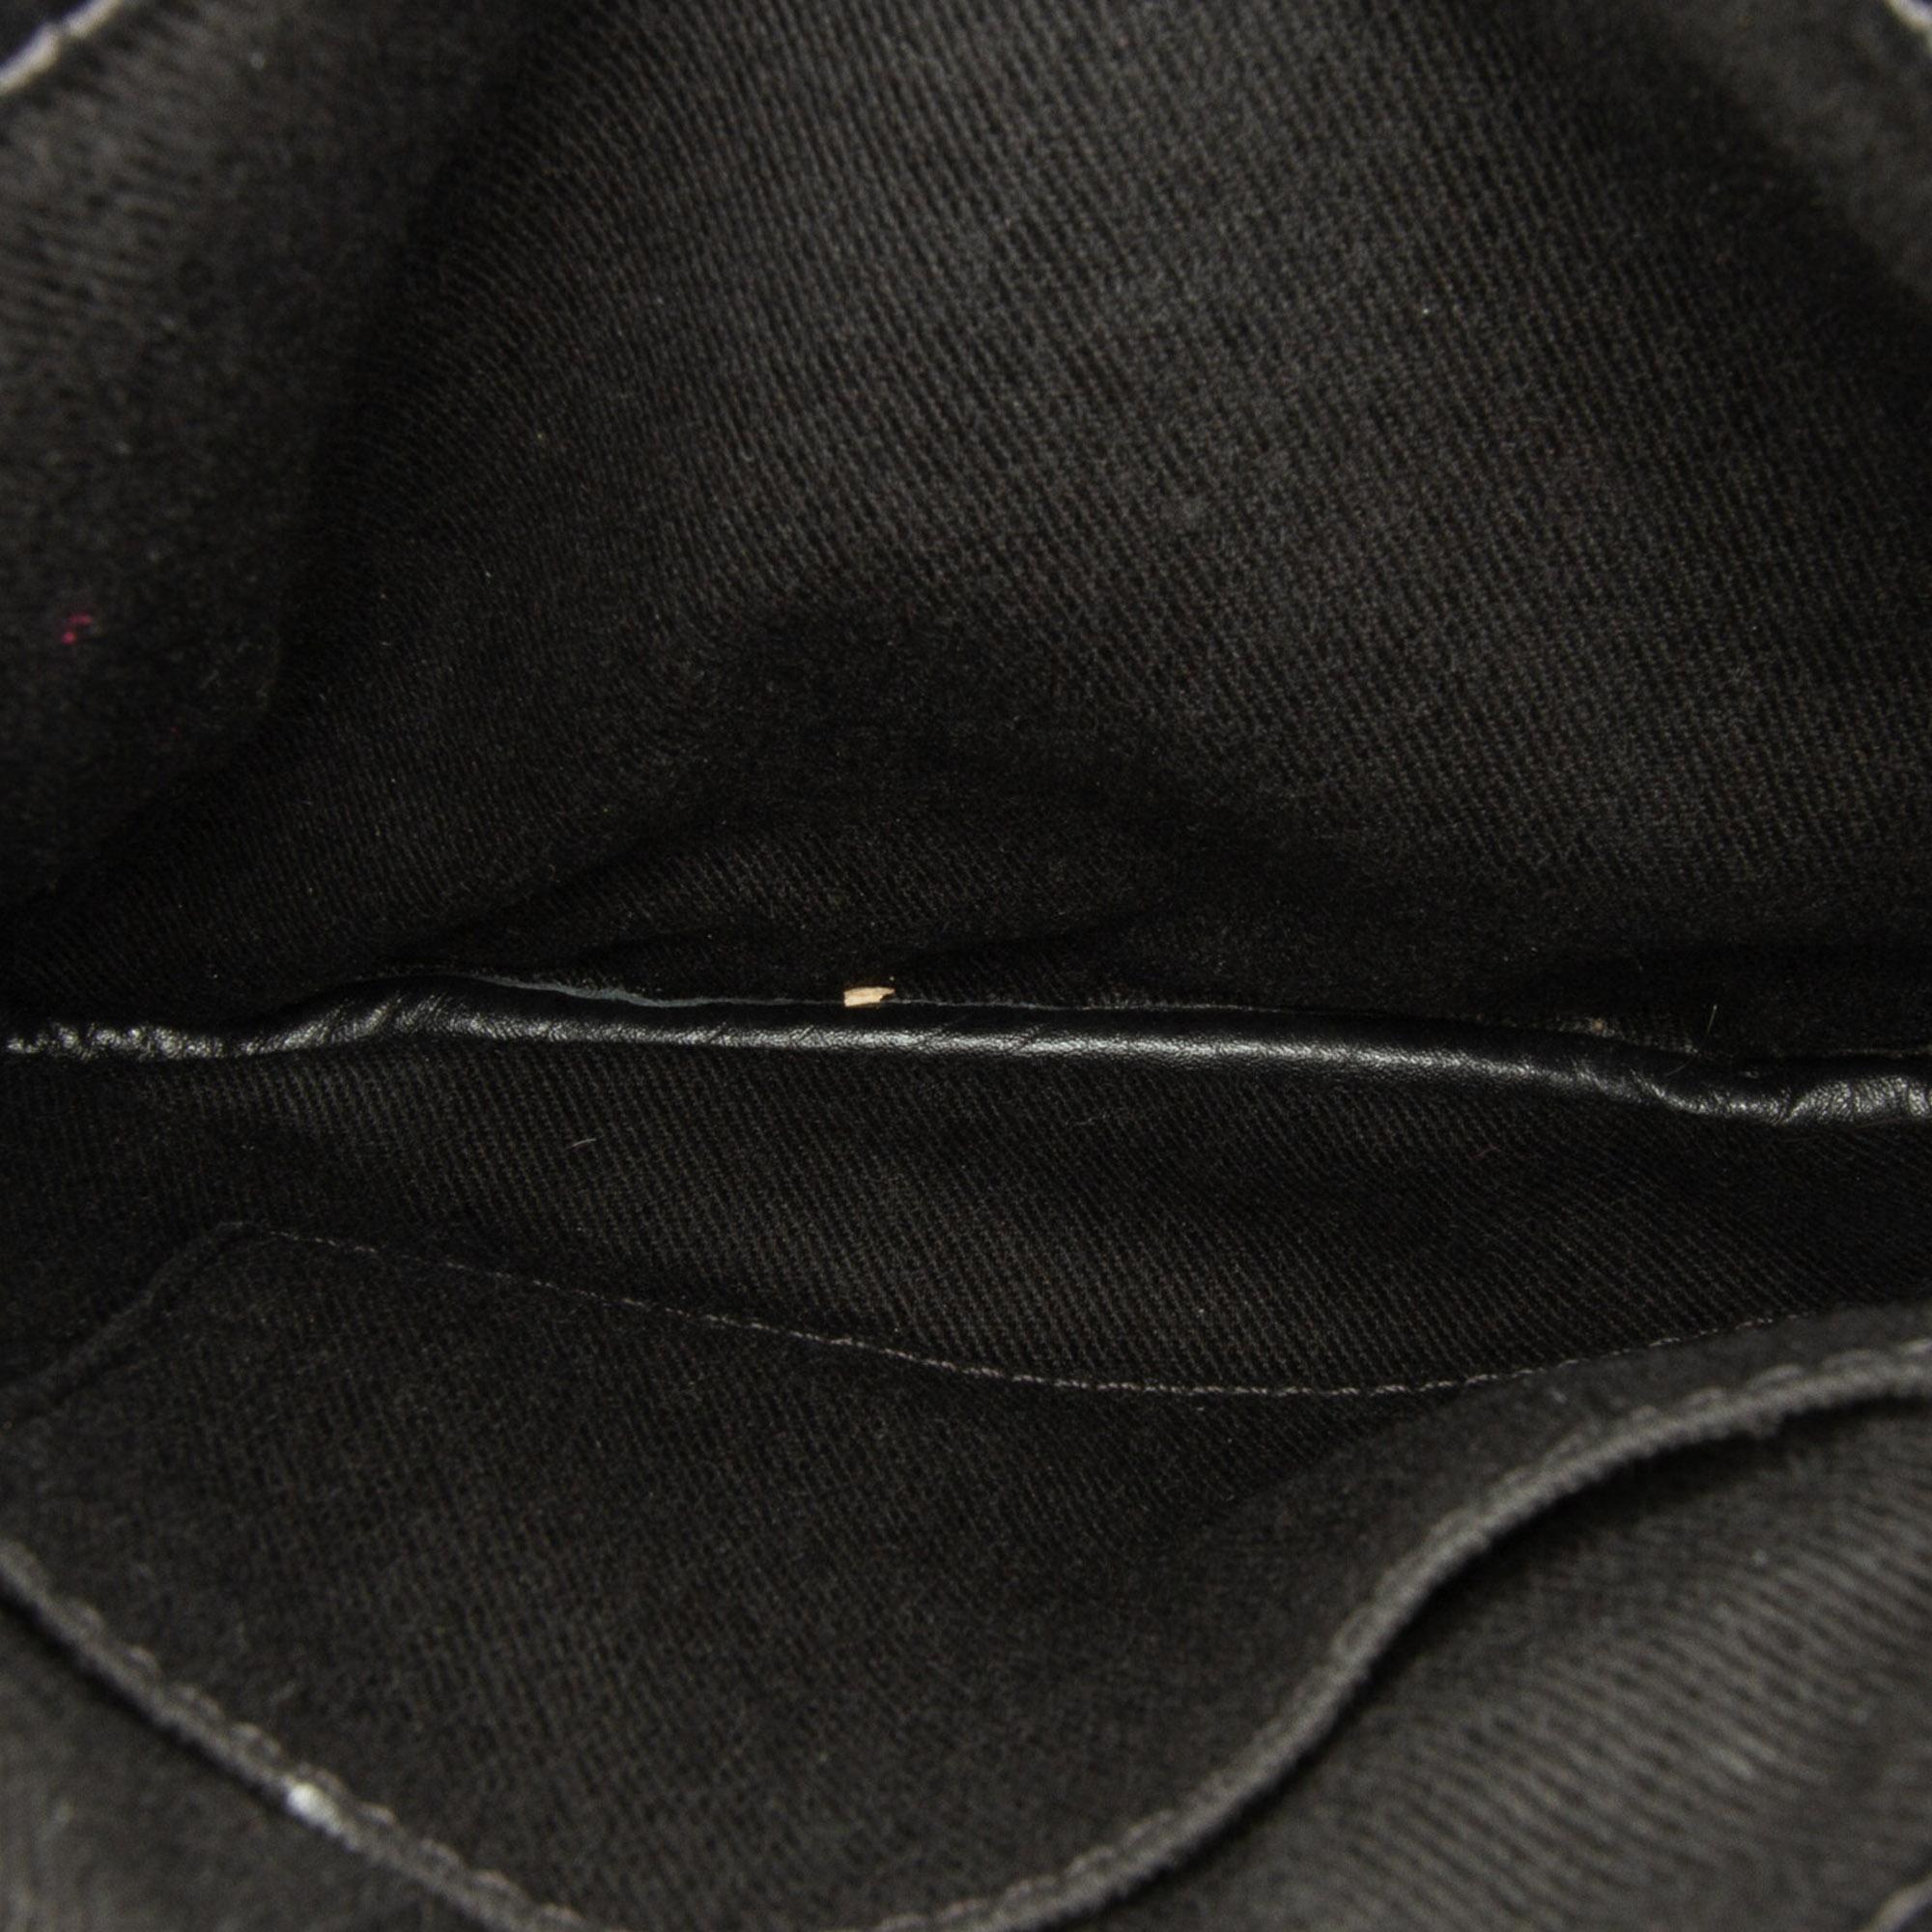 Chanel Black Uniform Crossbody Bag